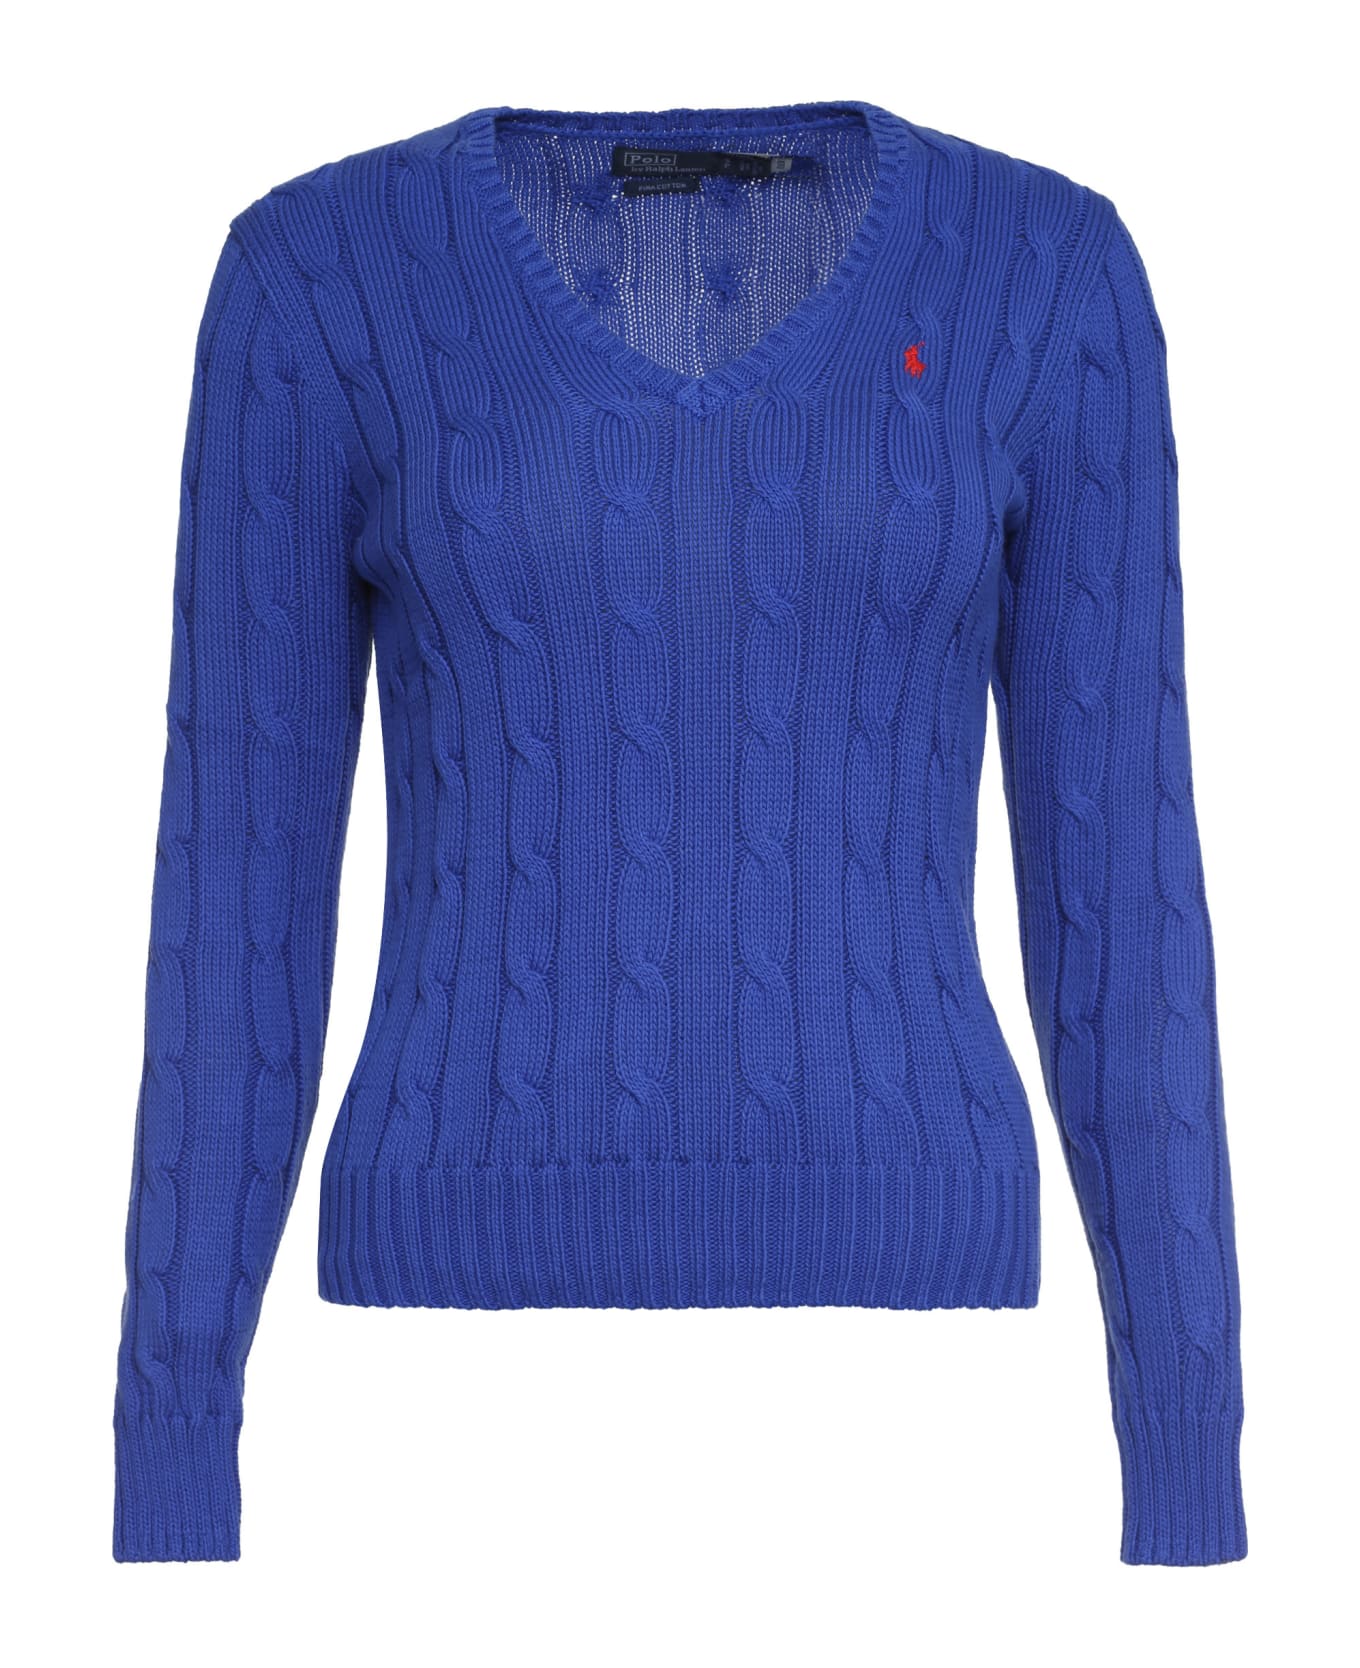 Polo Ralph Lauren Cable Knit Sweater - Light Blue